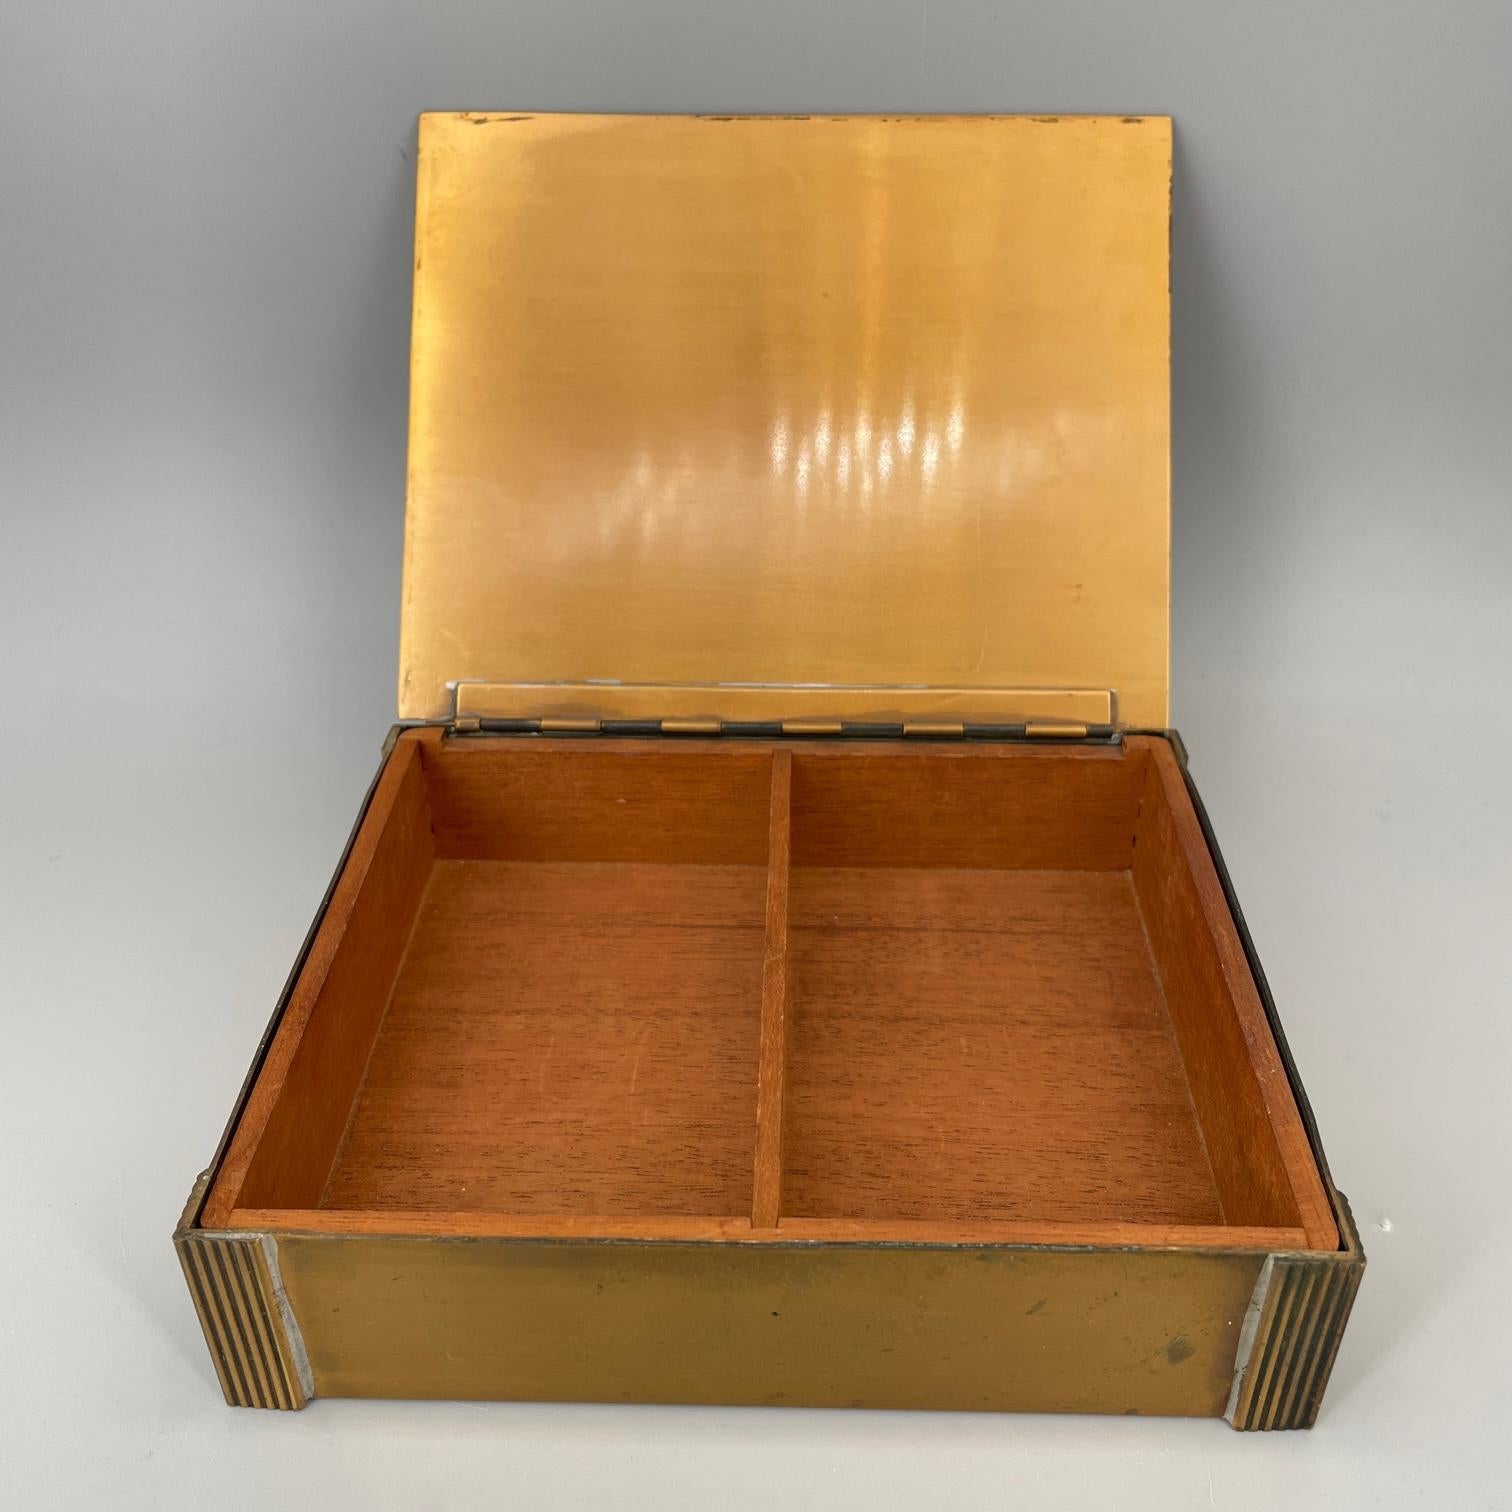 American 1930s Rockwell Kent Bacchus Copper Cigarette Box Chase Art Deco Relief Sculpture For Sale